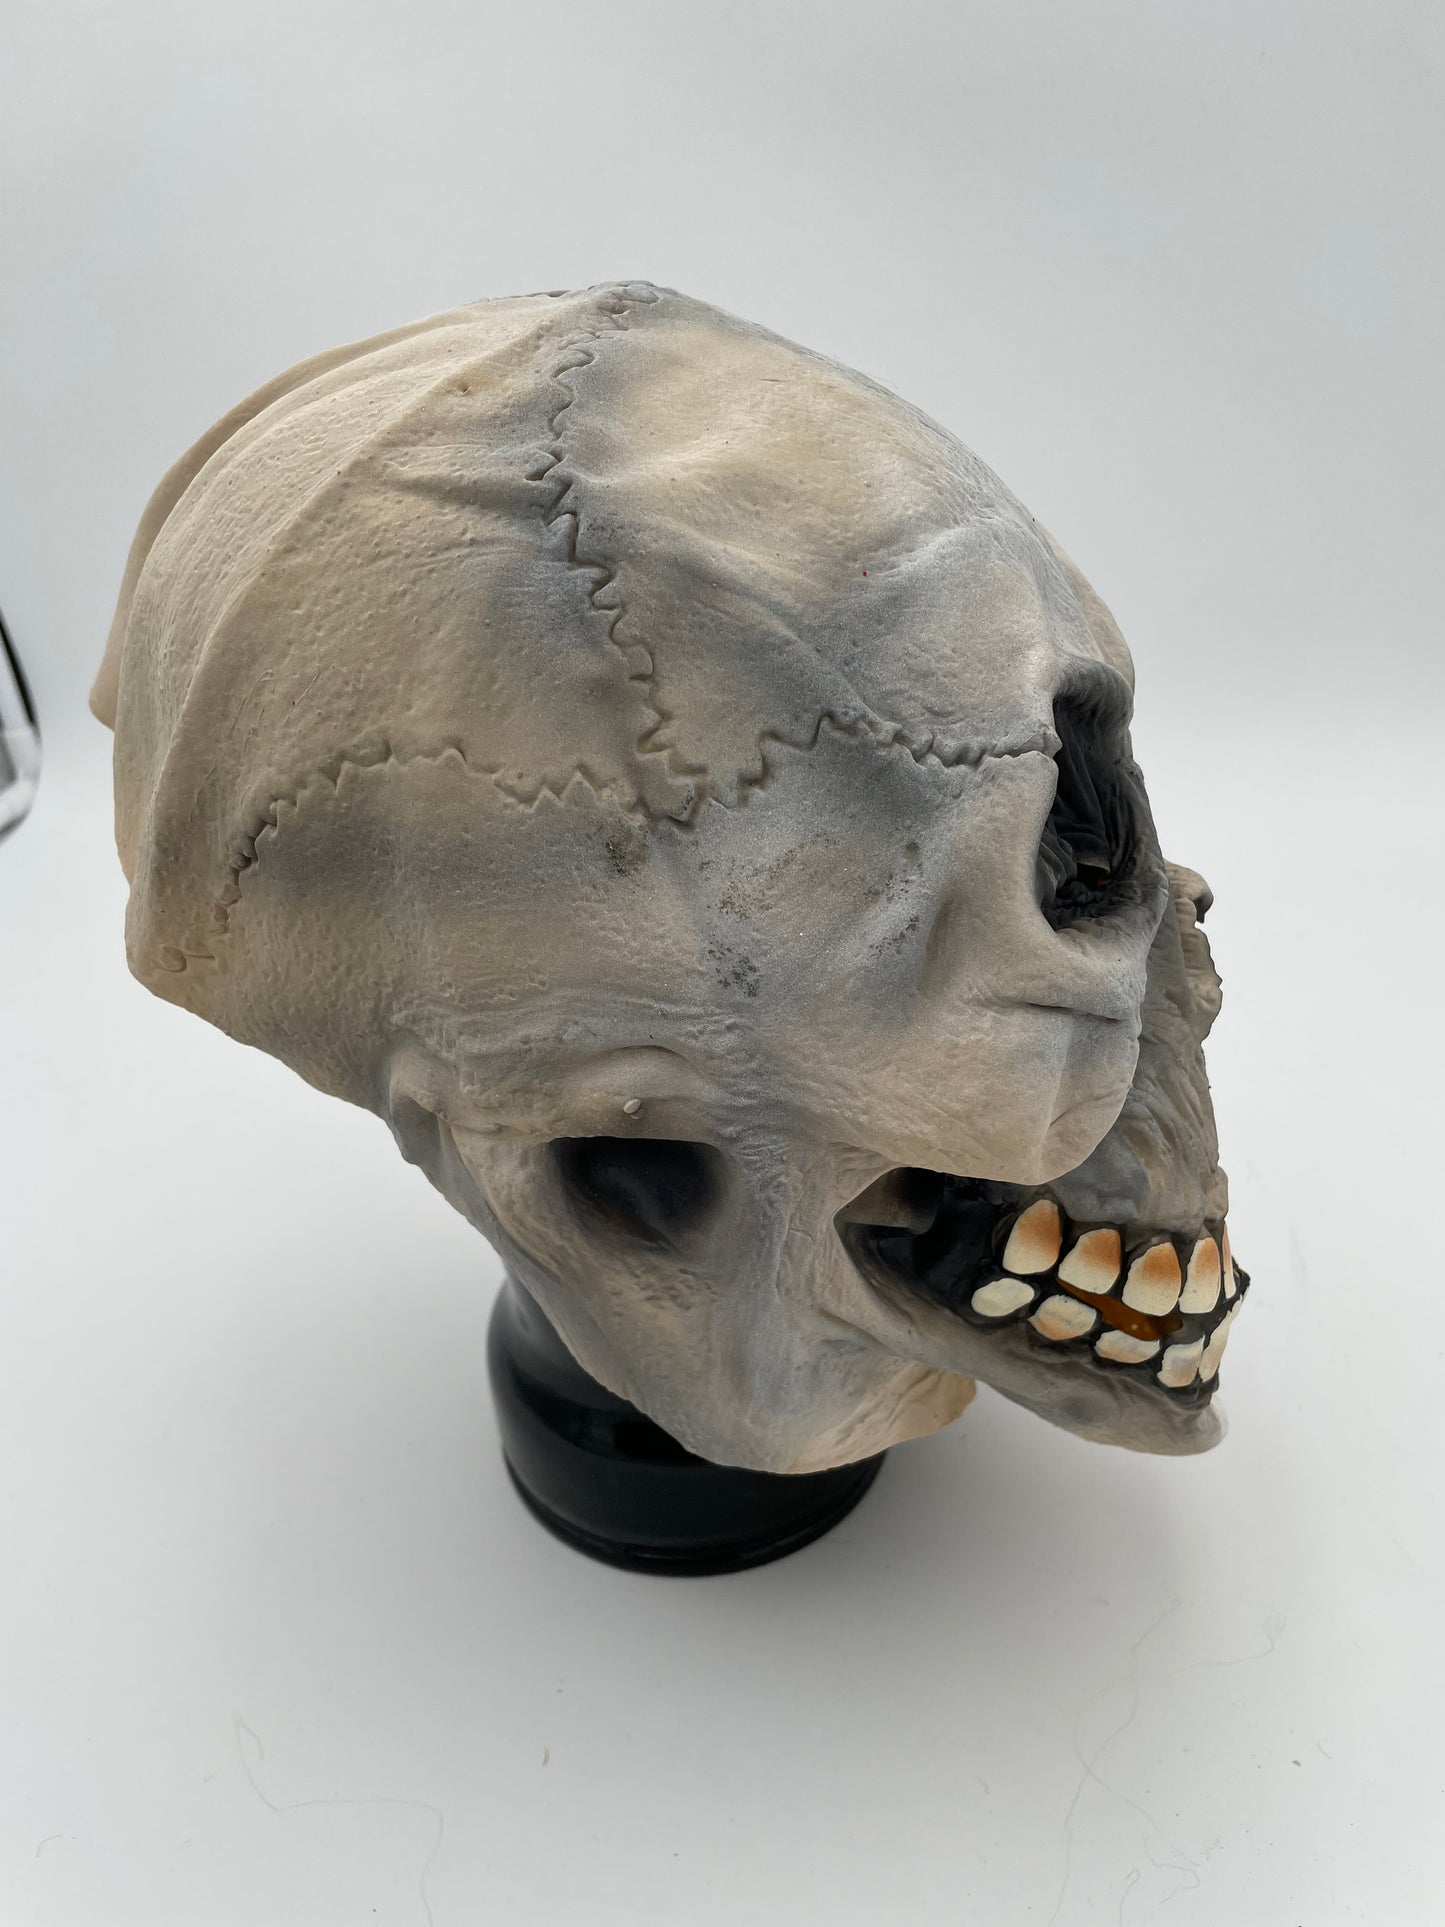 Halloween Mask - Vintage 1990s - Skull #100491